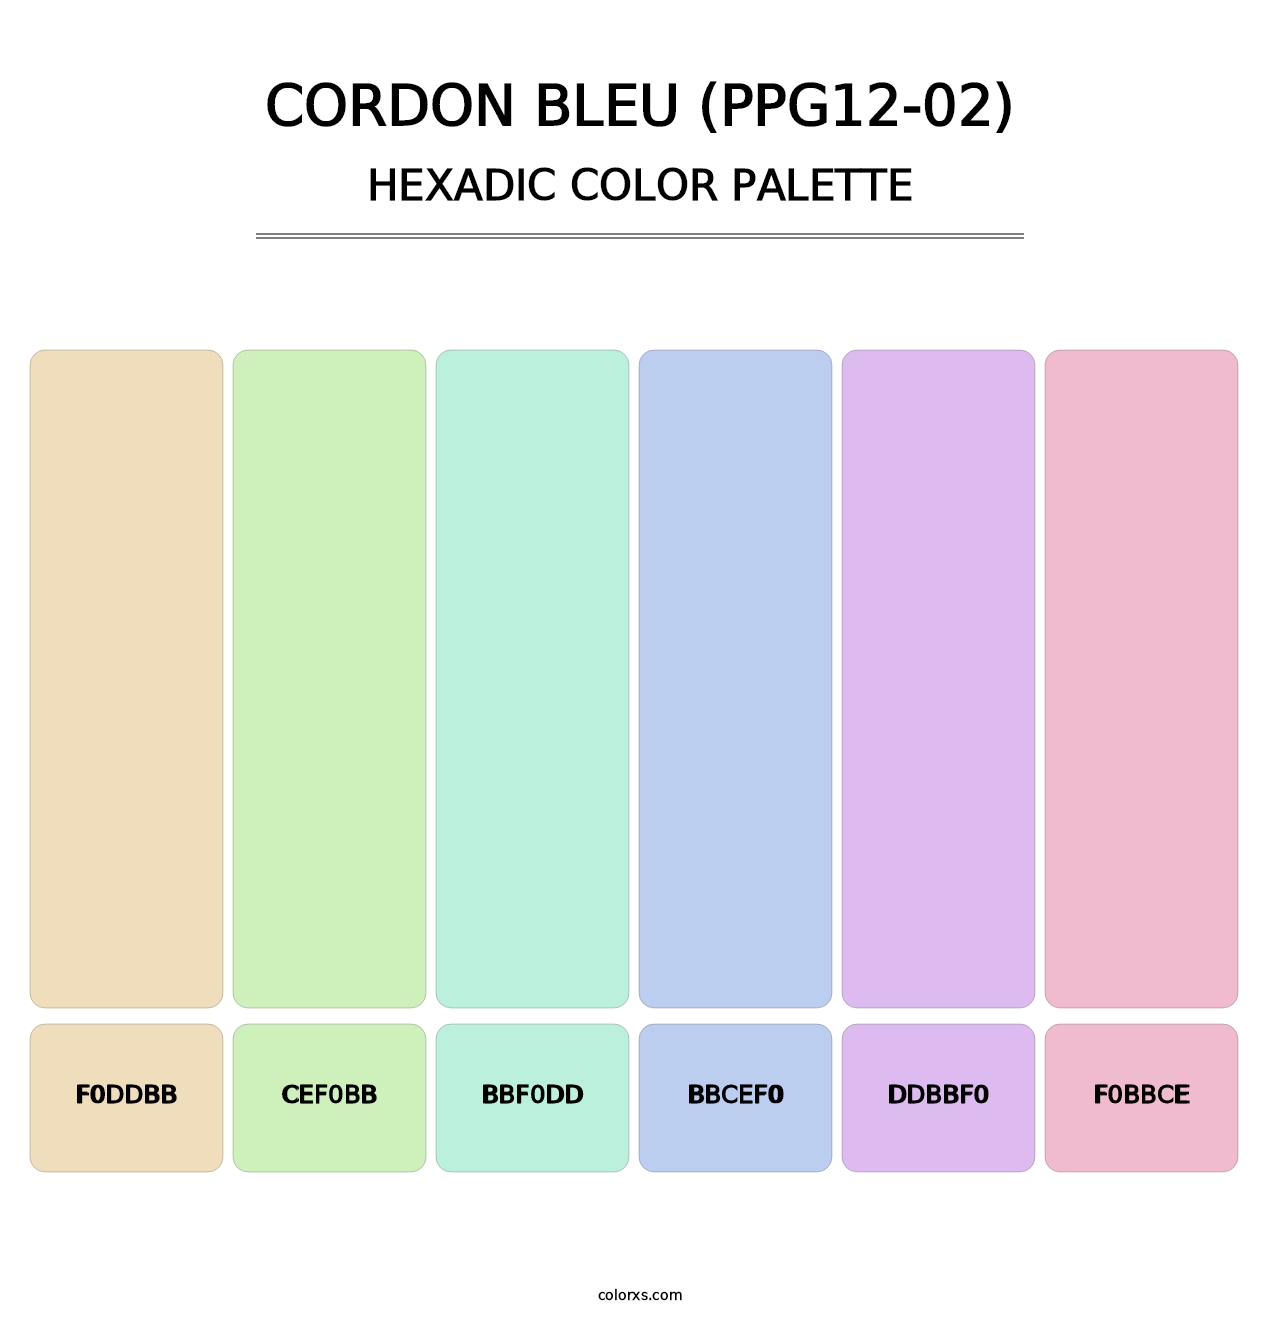 Cordon Bleu (PPG12-02) - Hexadic Color Palette